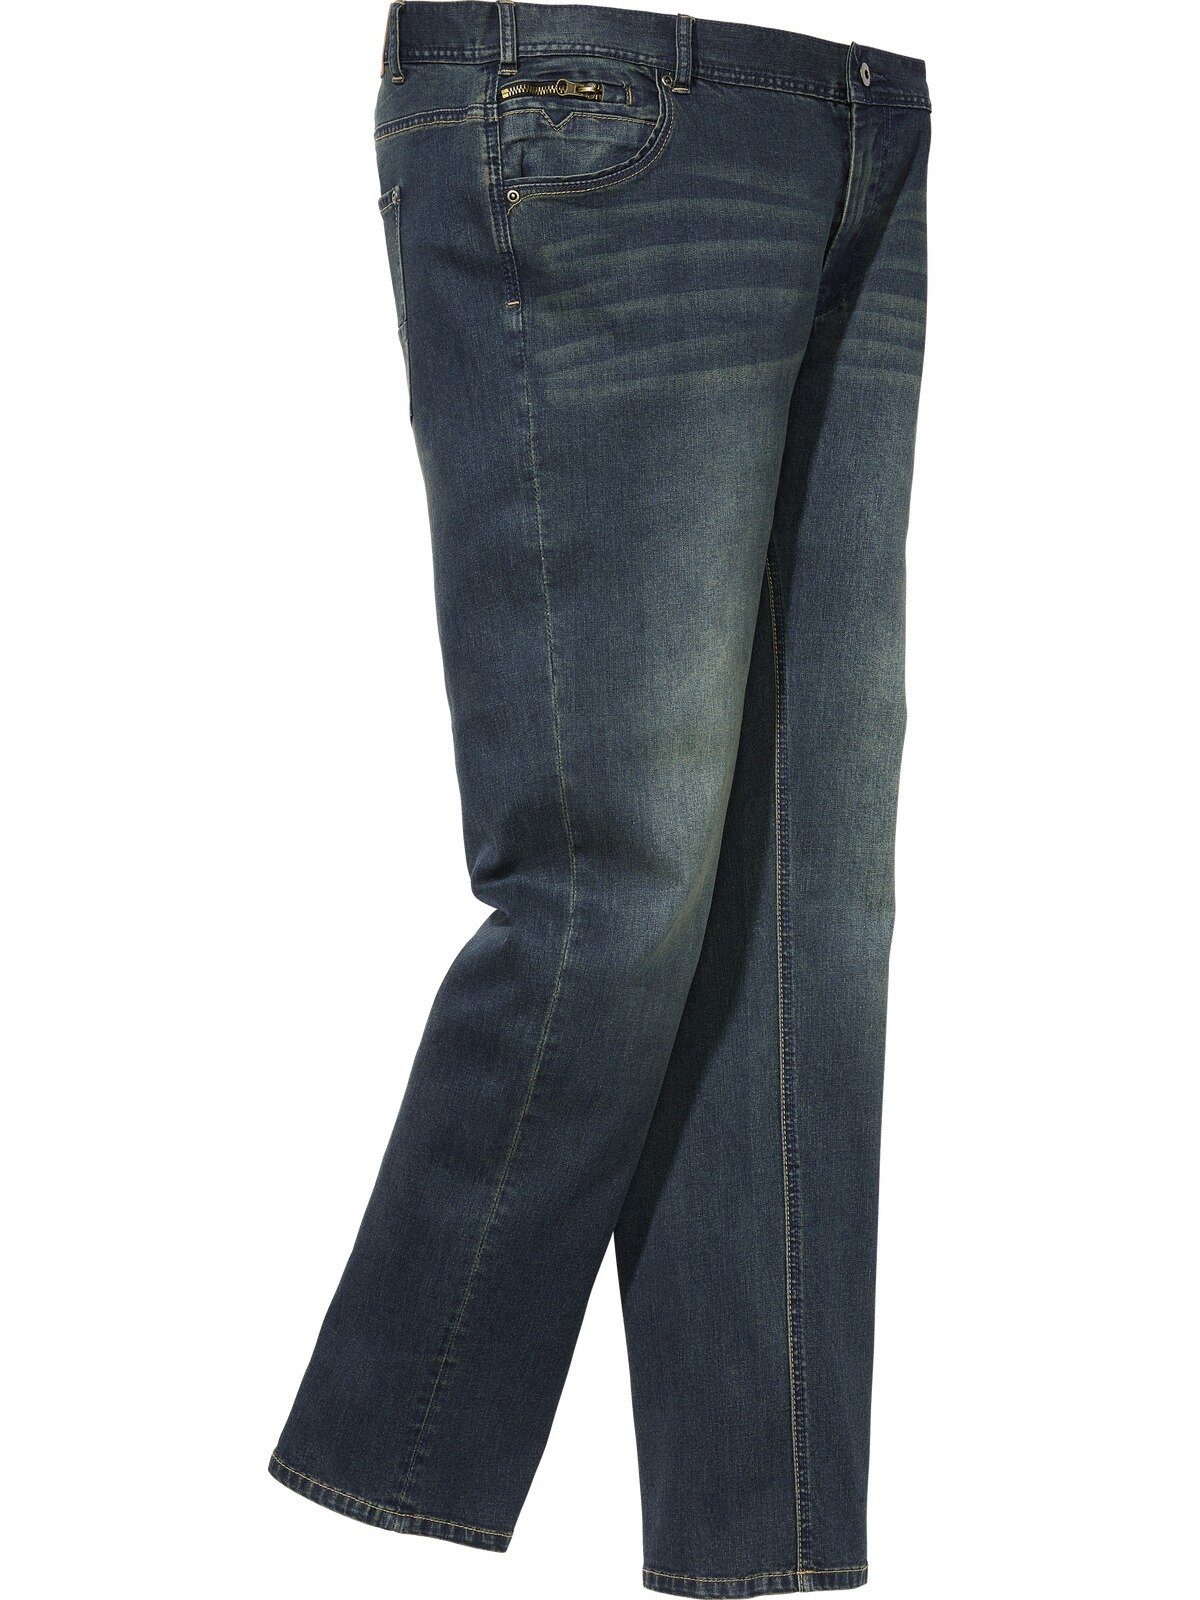 BARON TAHAMS 5-Pocket-Jeans Used-Look im Colby Charles